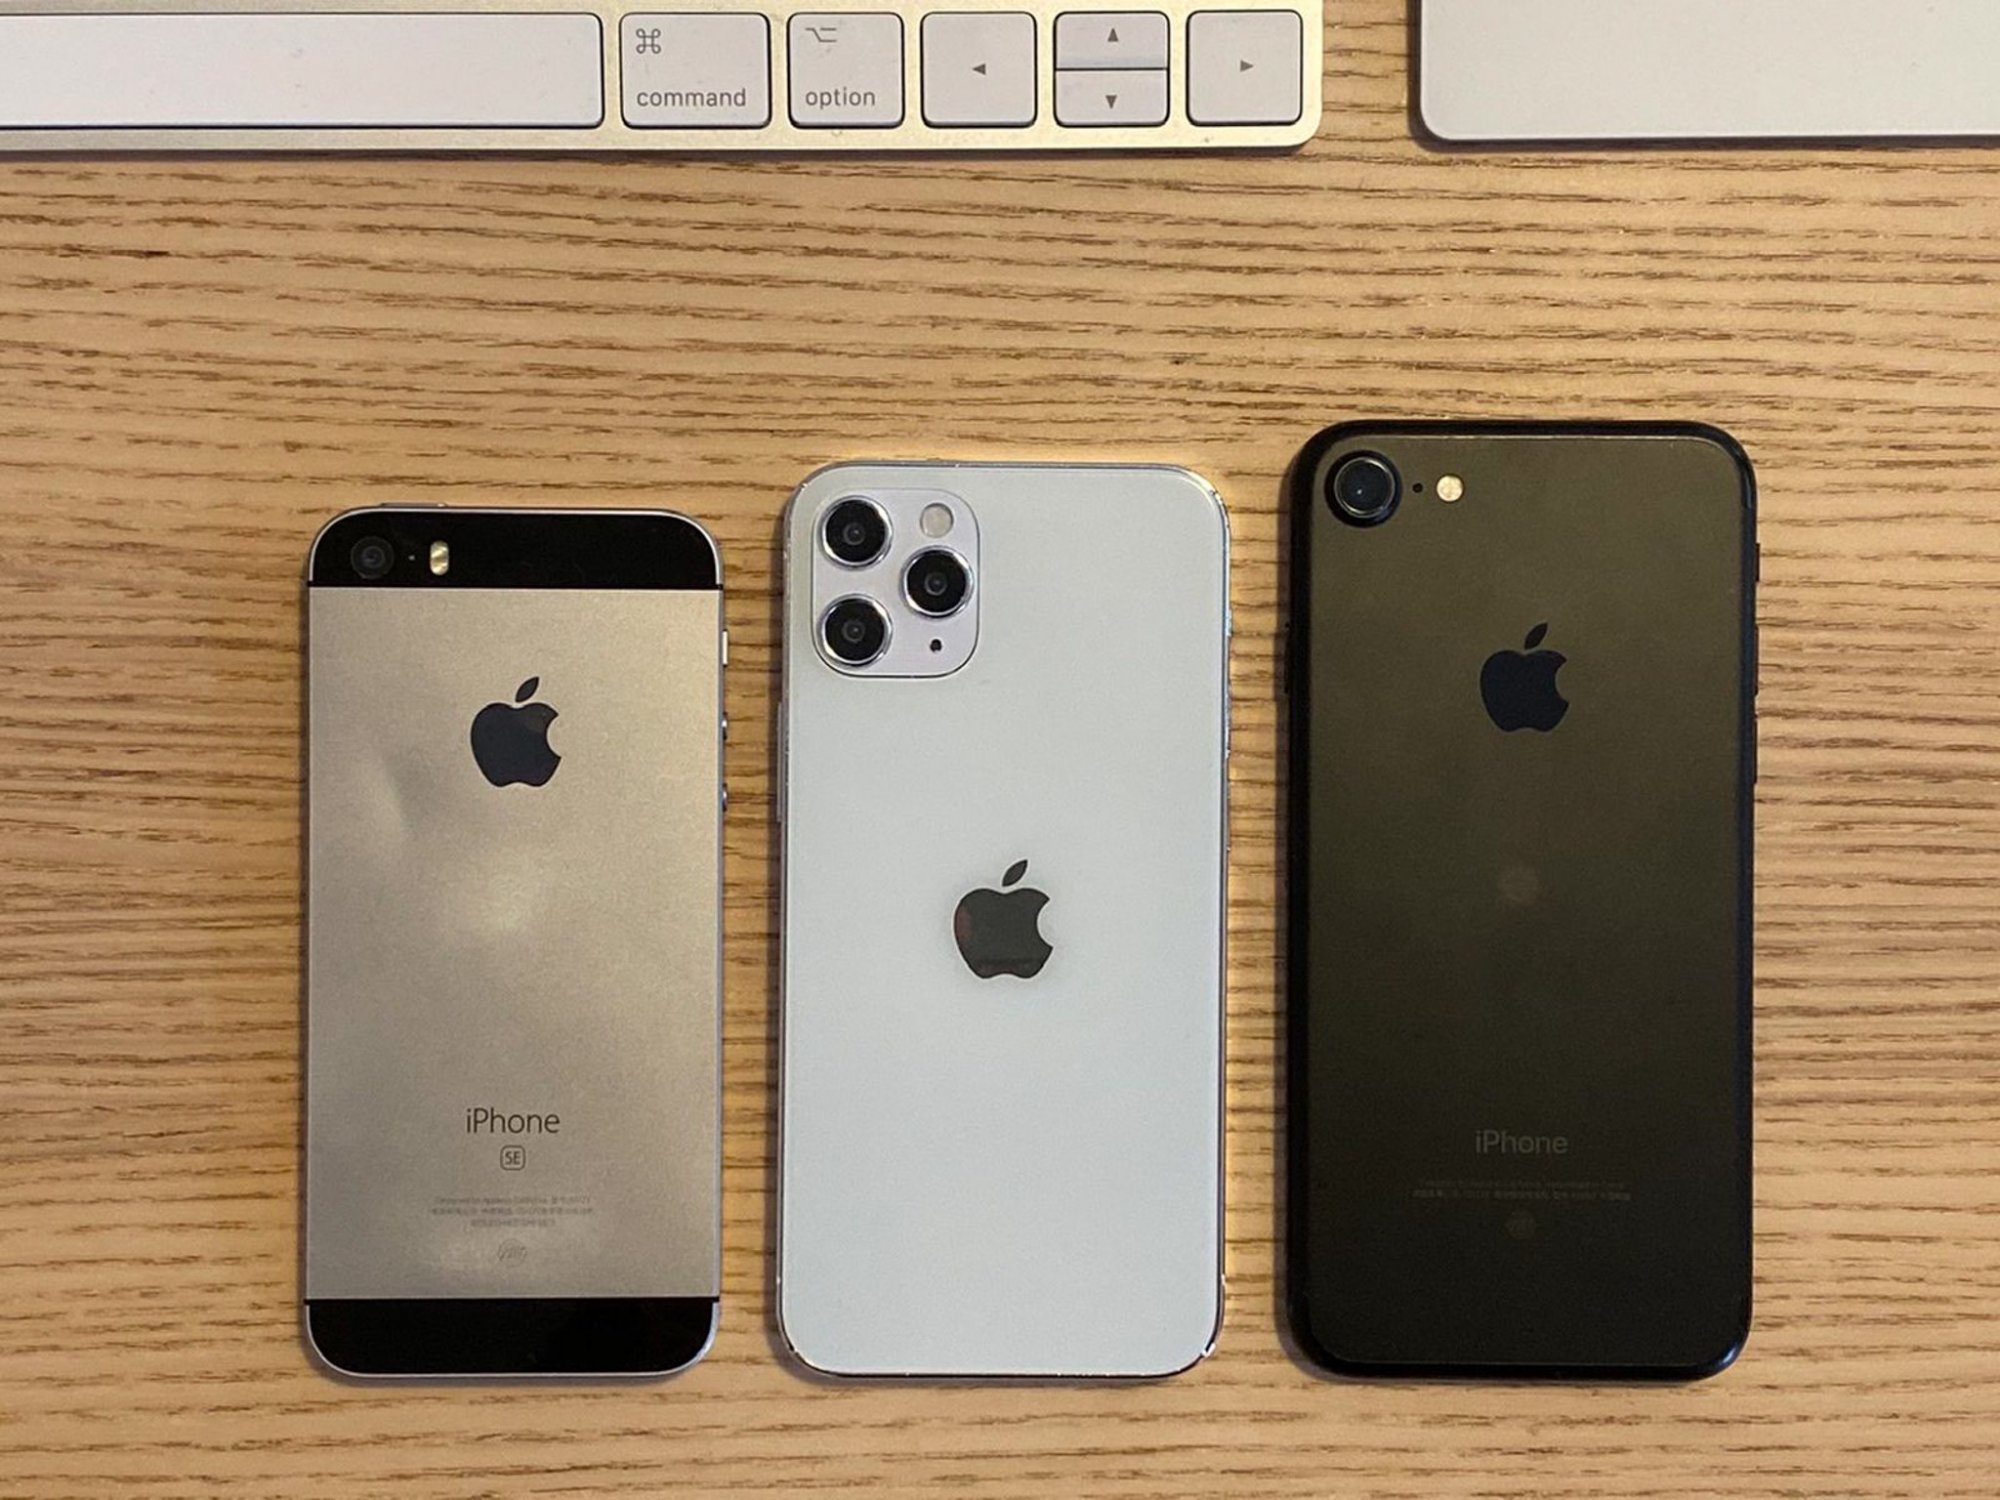 12 мини сравнение размеров. Iphone 12 Mini и iphone 7. Iphone 12 Mini и 5s. Iphone 12 Mini vs iphone 7. Iphone 12 Mini и iphone se.